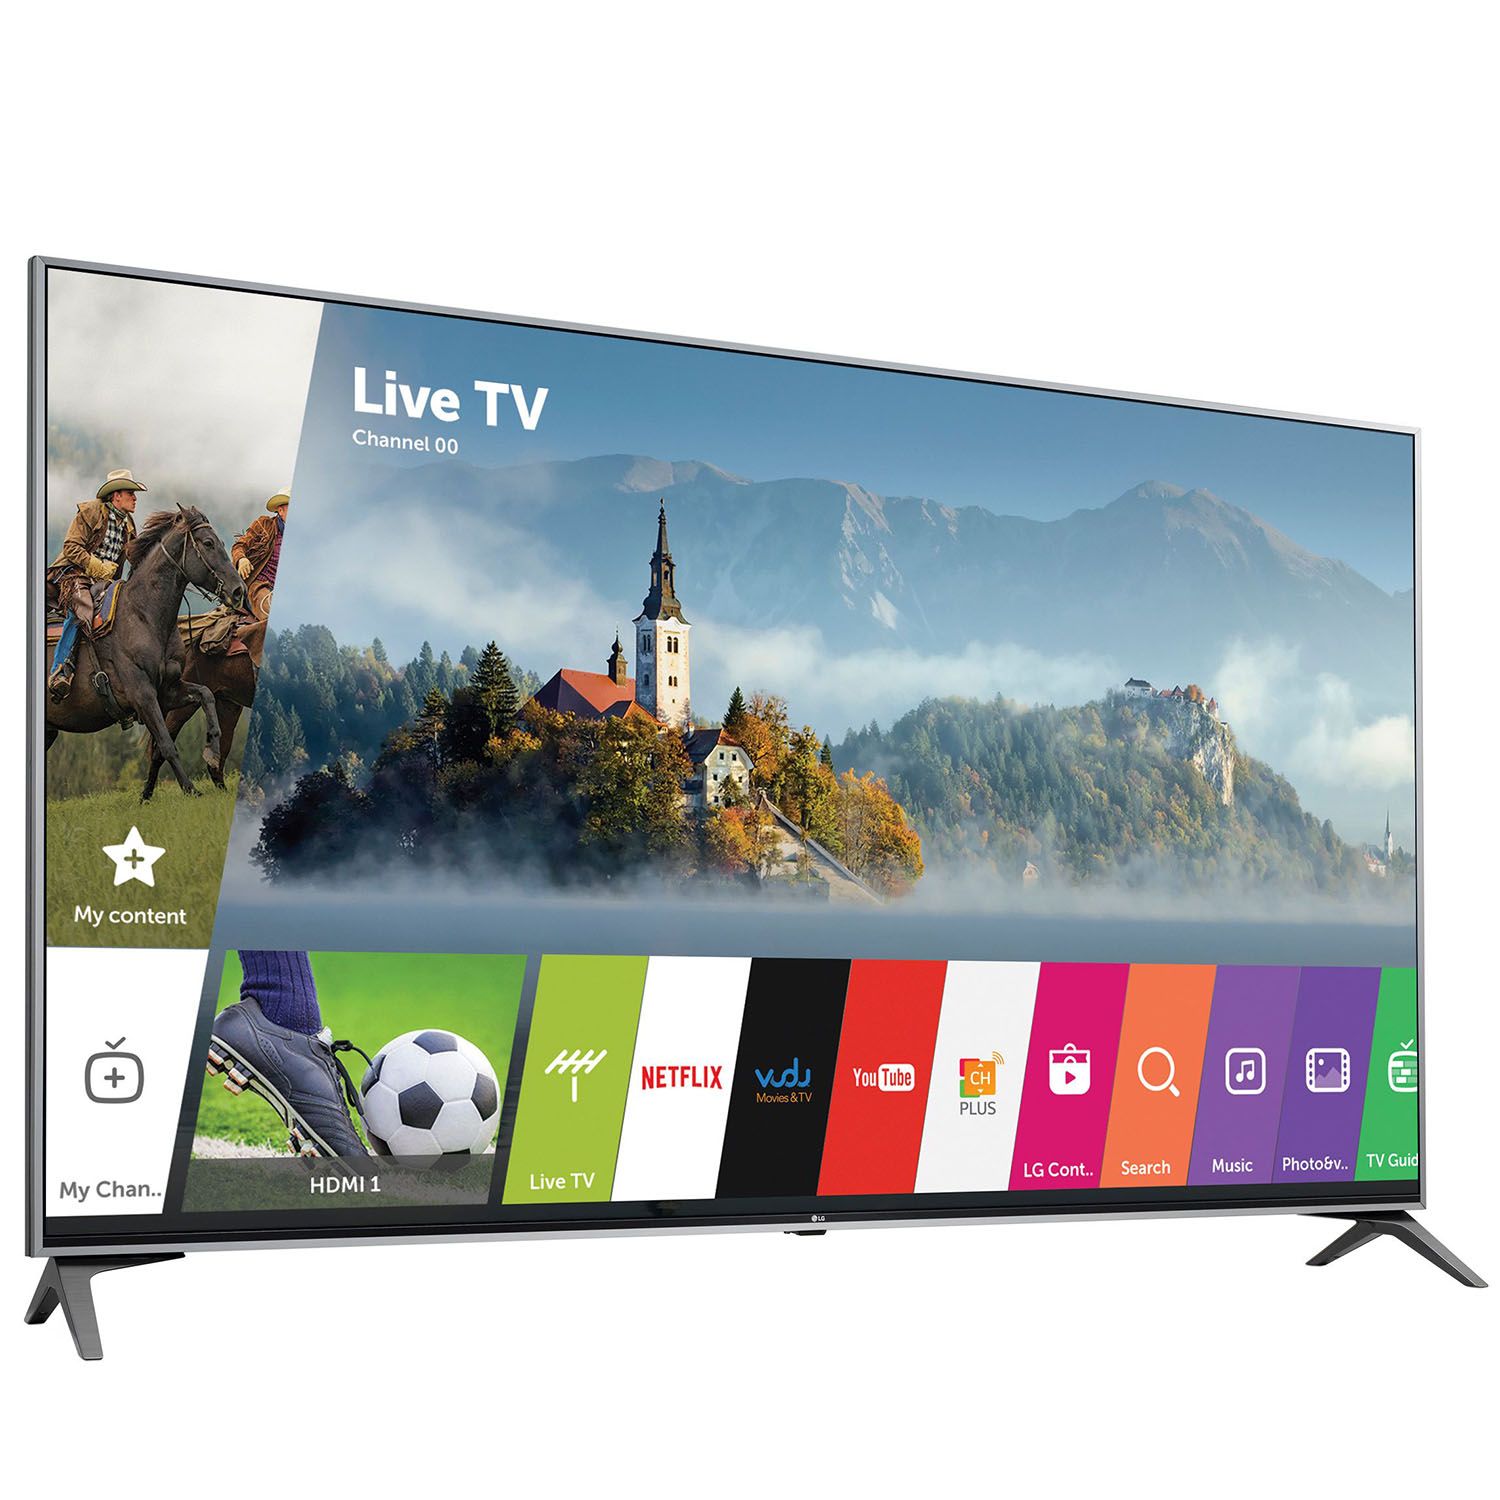 LG 55UJ7700 55″ 4K WebOS Smart LED TV